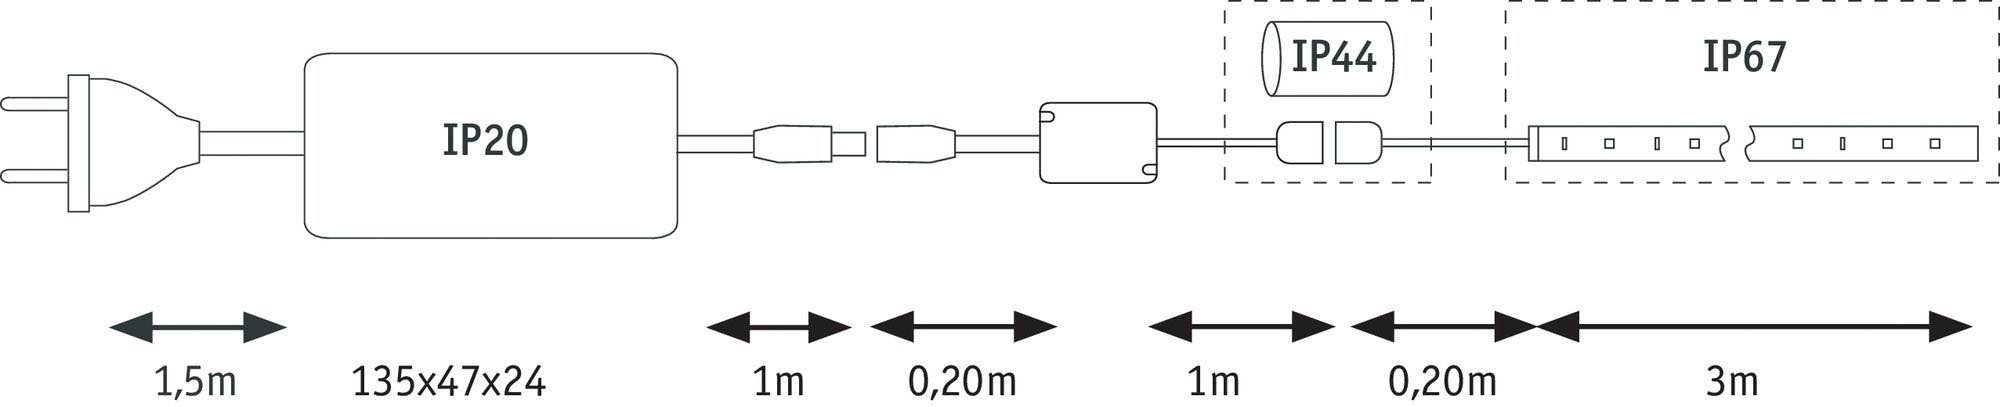 3m LED-Streifen Set Basic MaxLED Flow Paulmann RGB